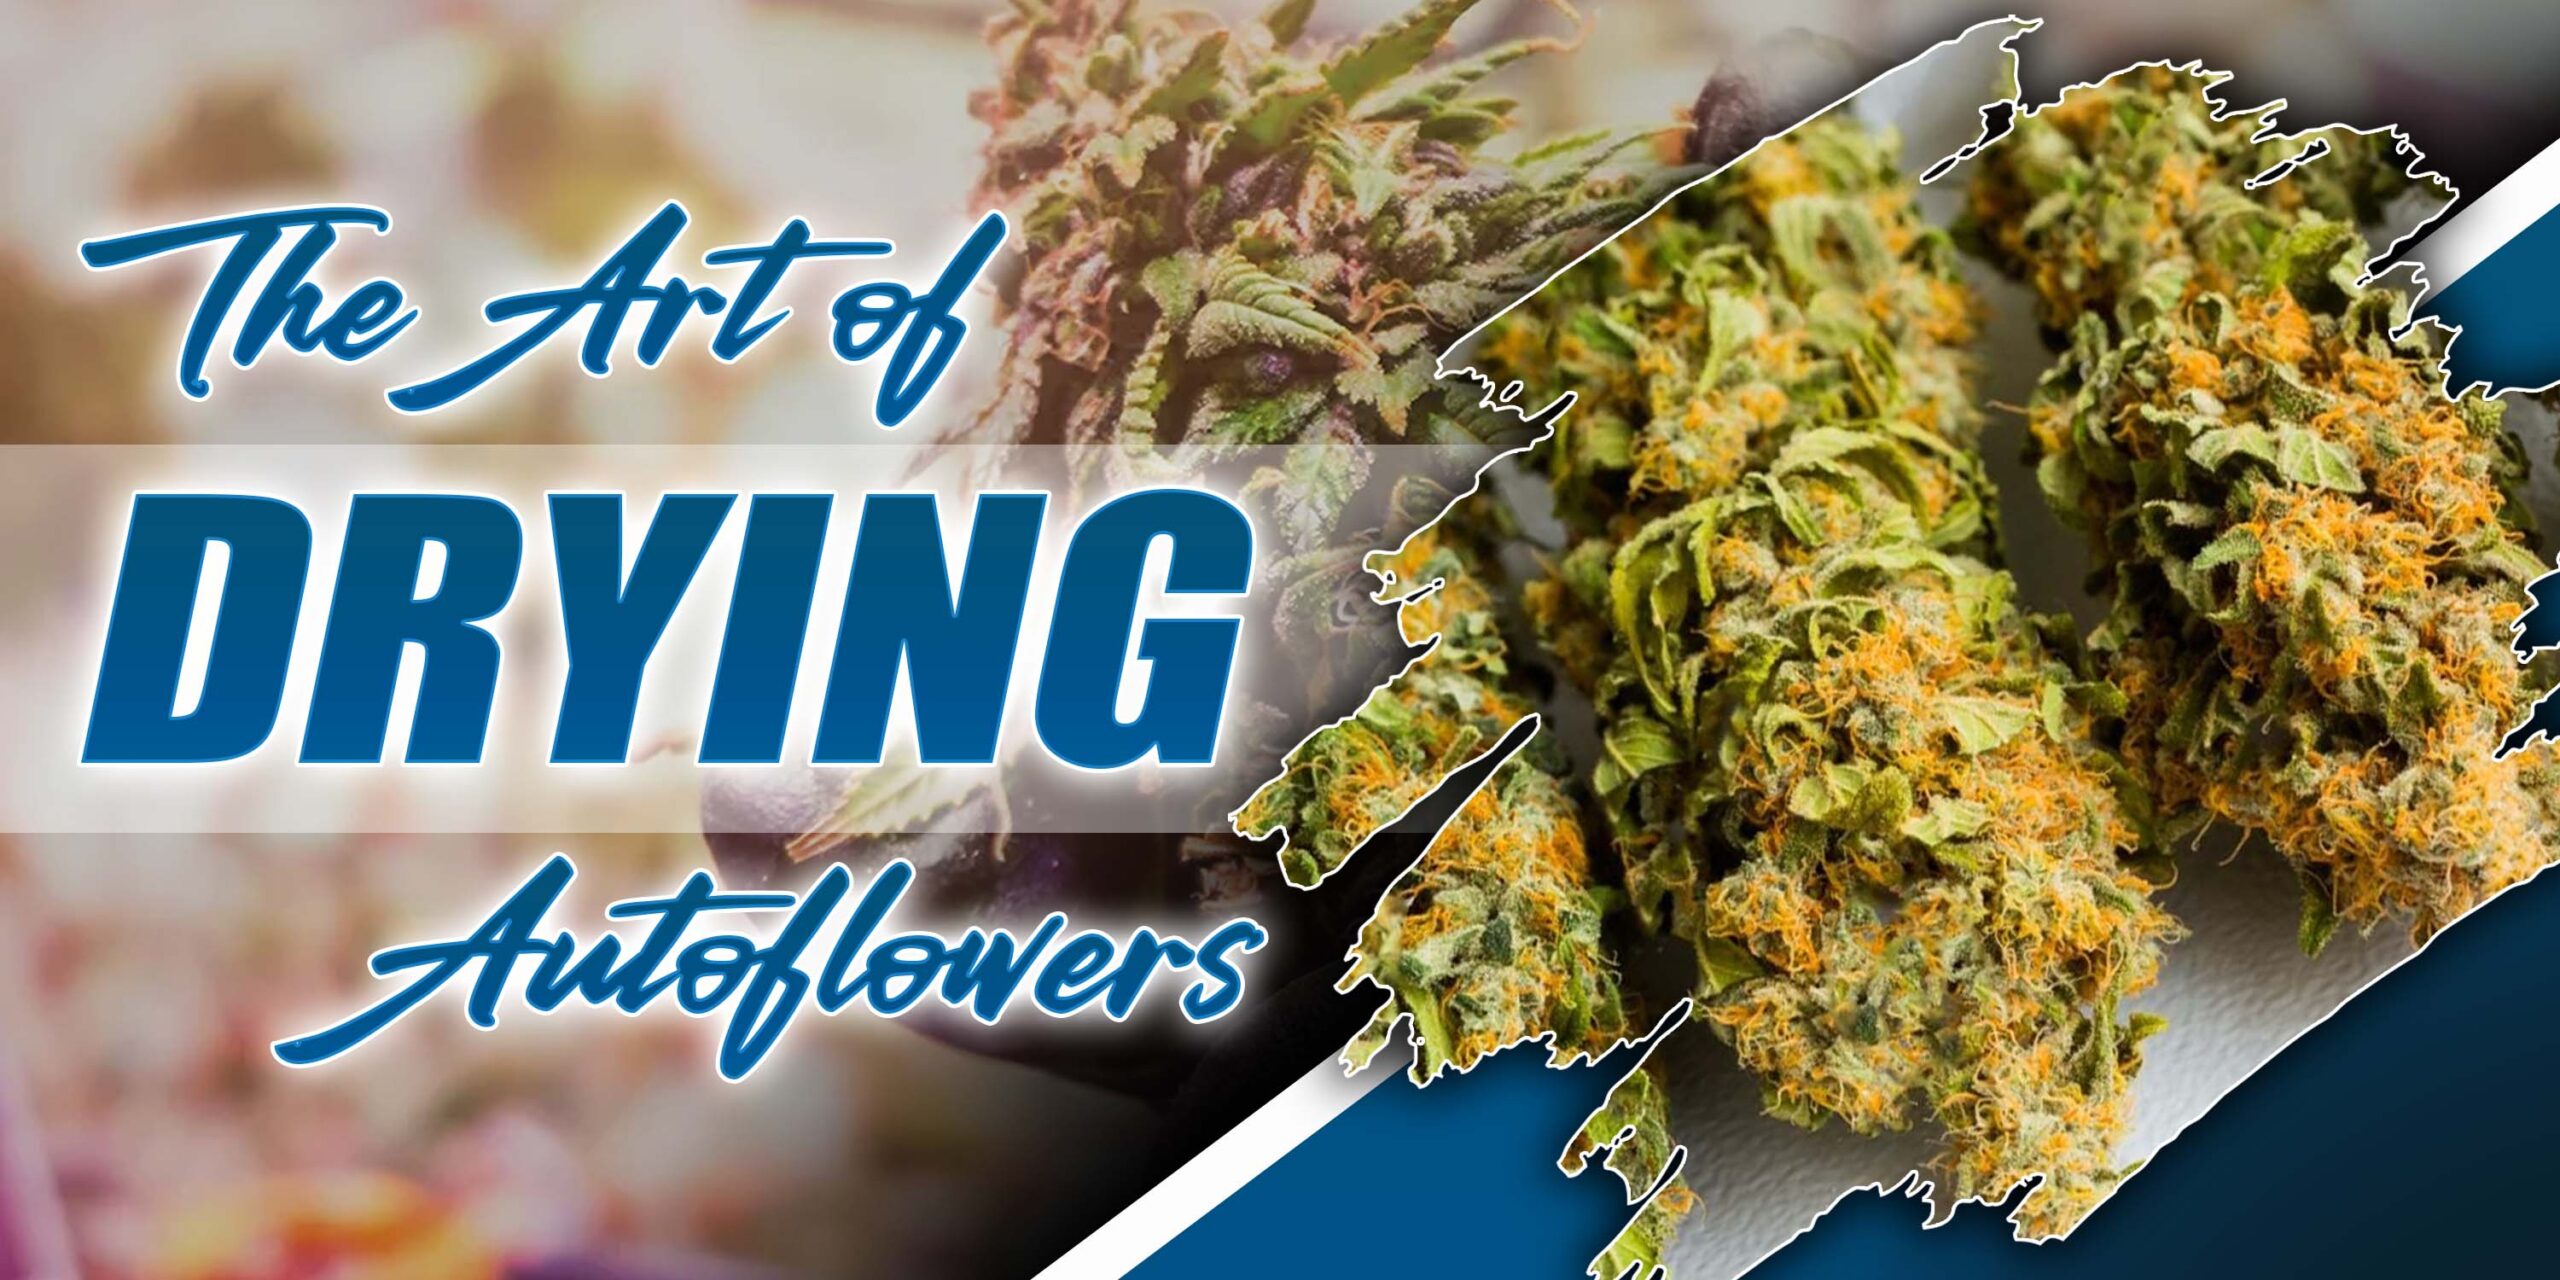 The Art of Drying Autoflowers